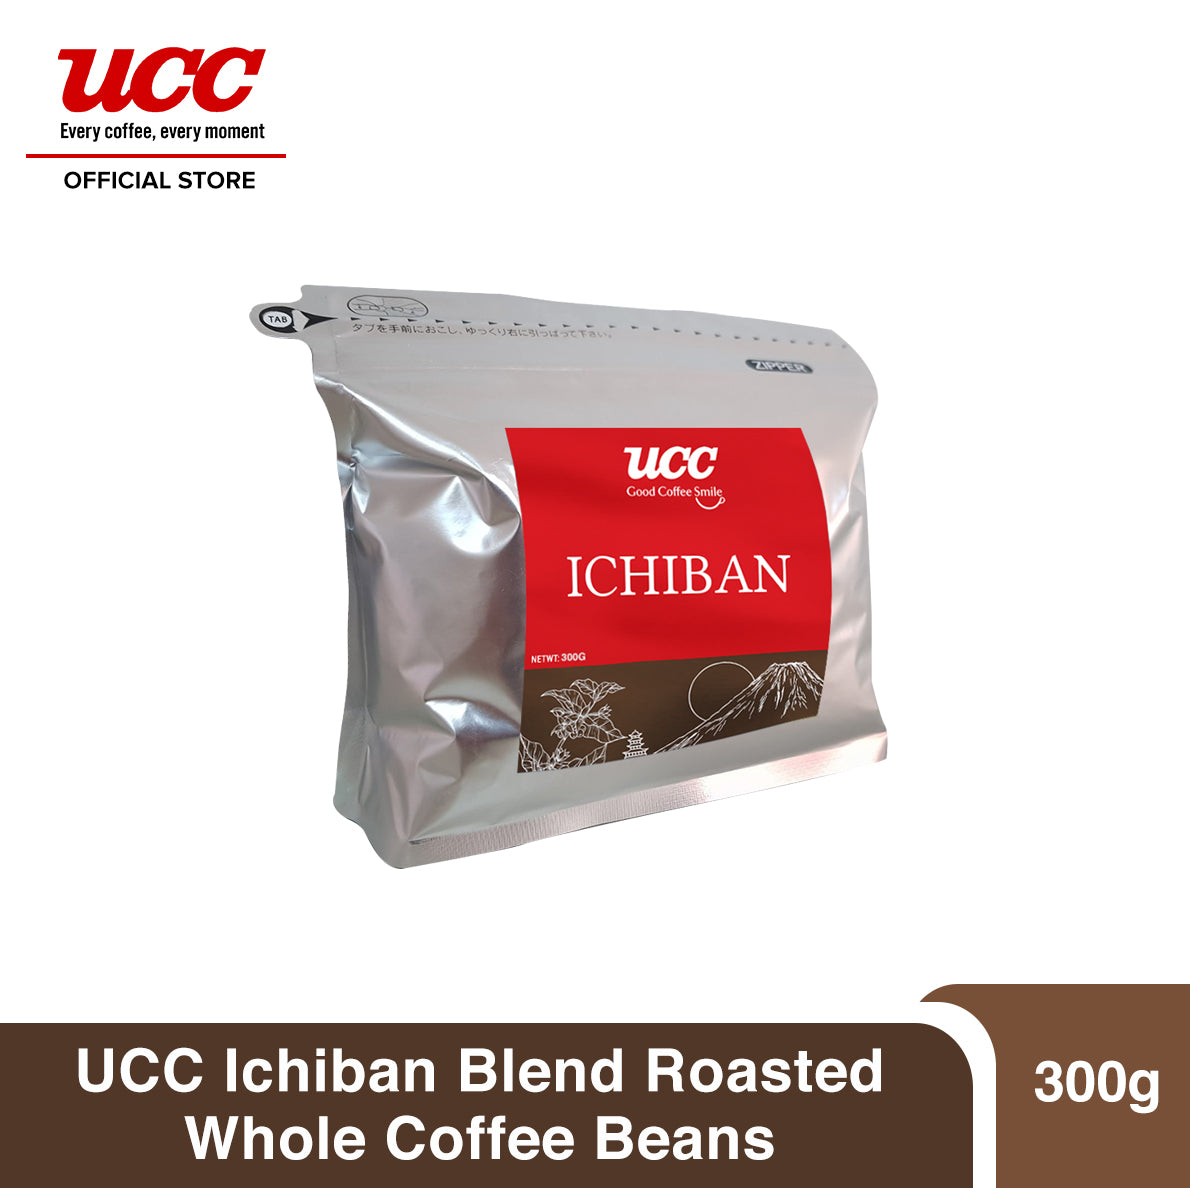 UCC Ichiban Blend Roasted Whole Coffee Beans 300g